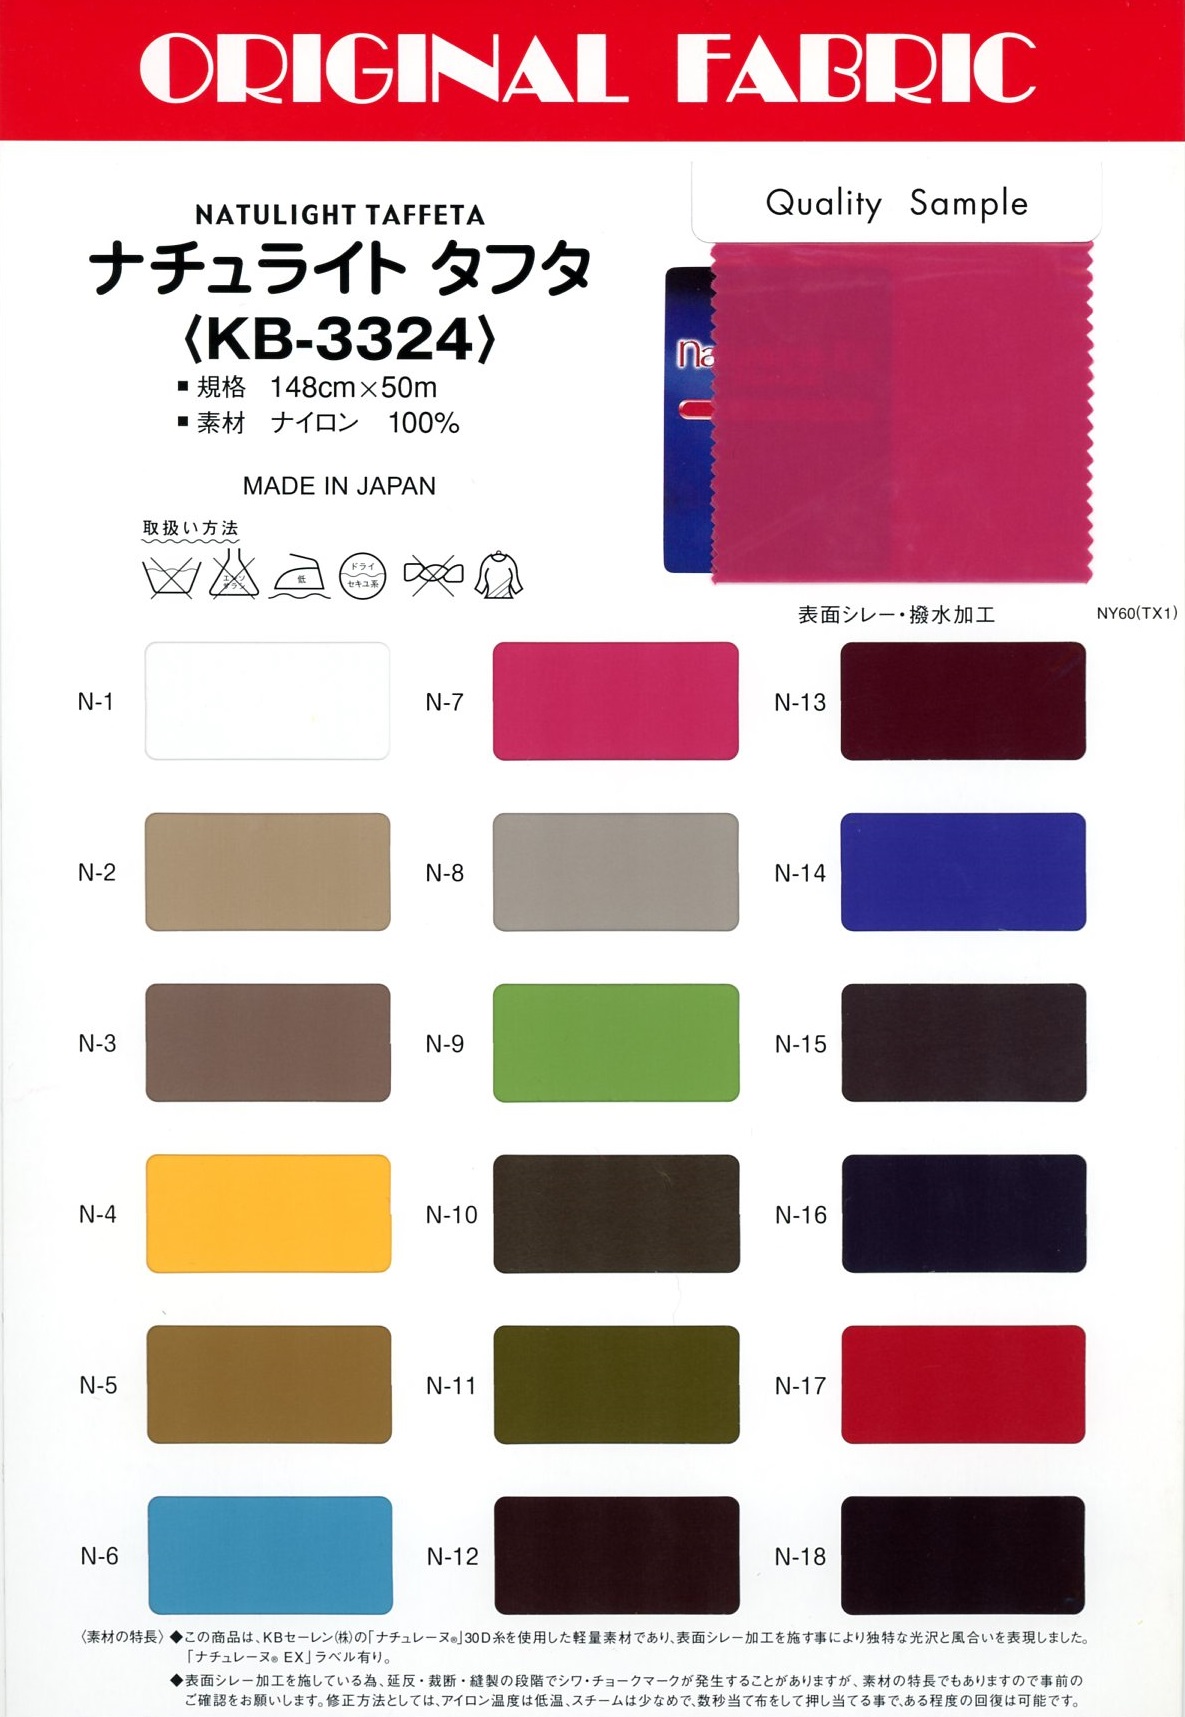 KB-3324 Naturite Taffeta[Textilgewebe] Masuda